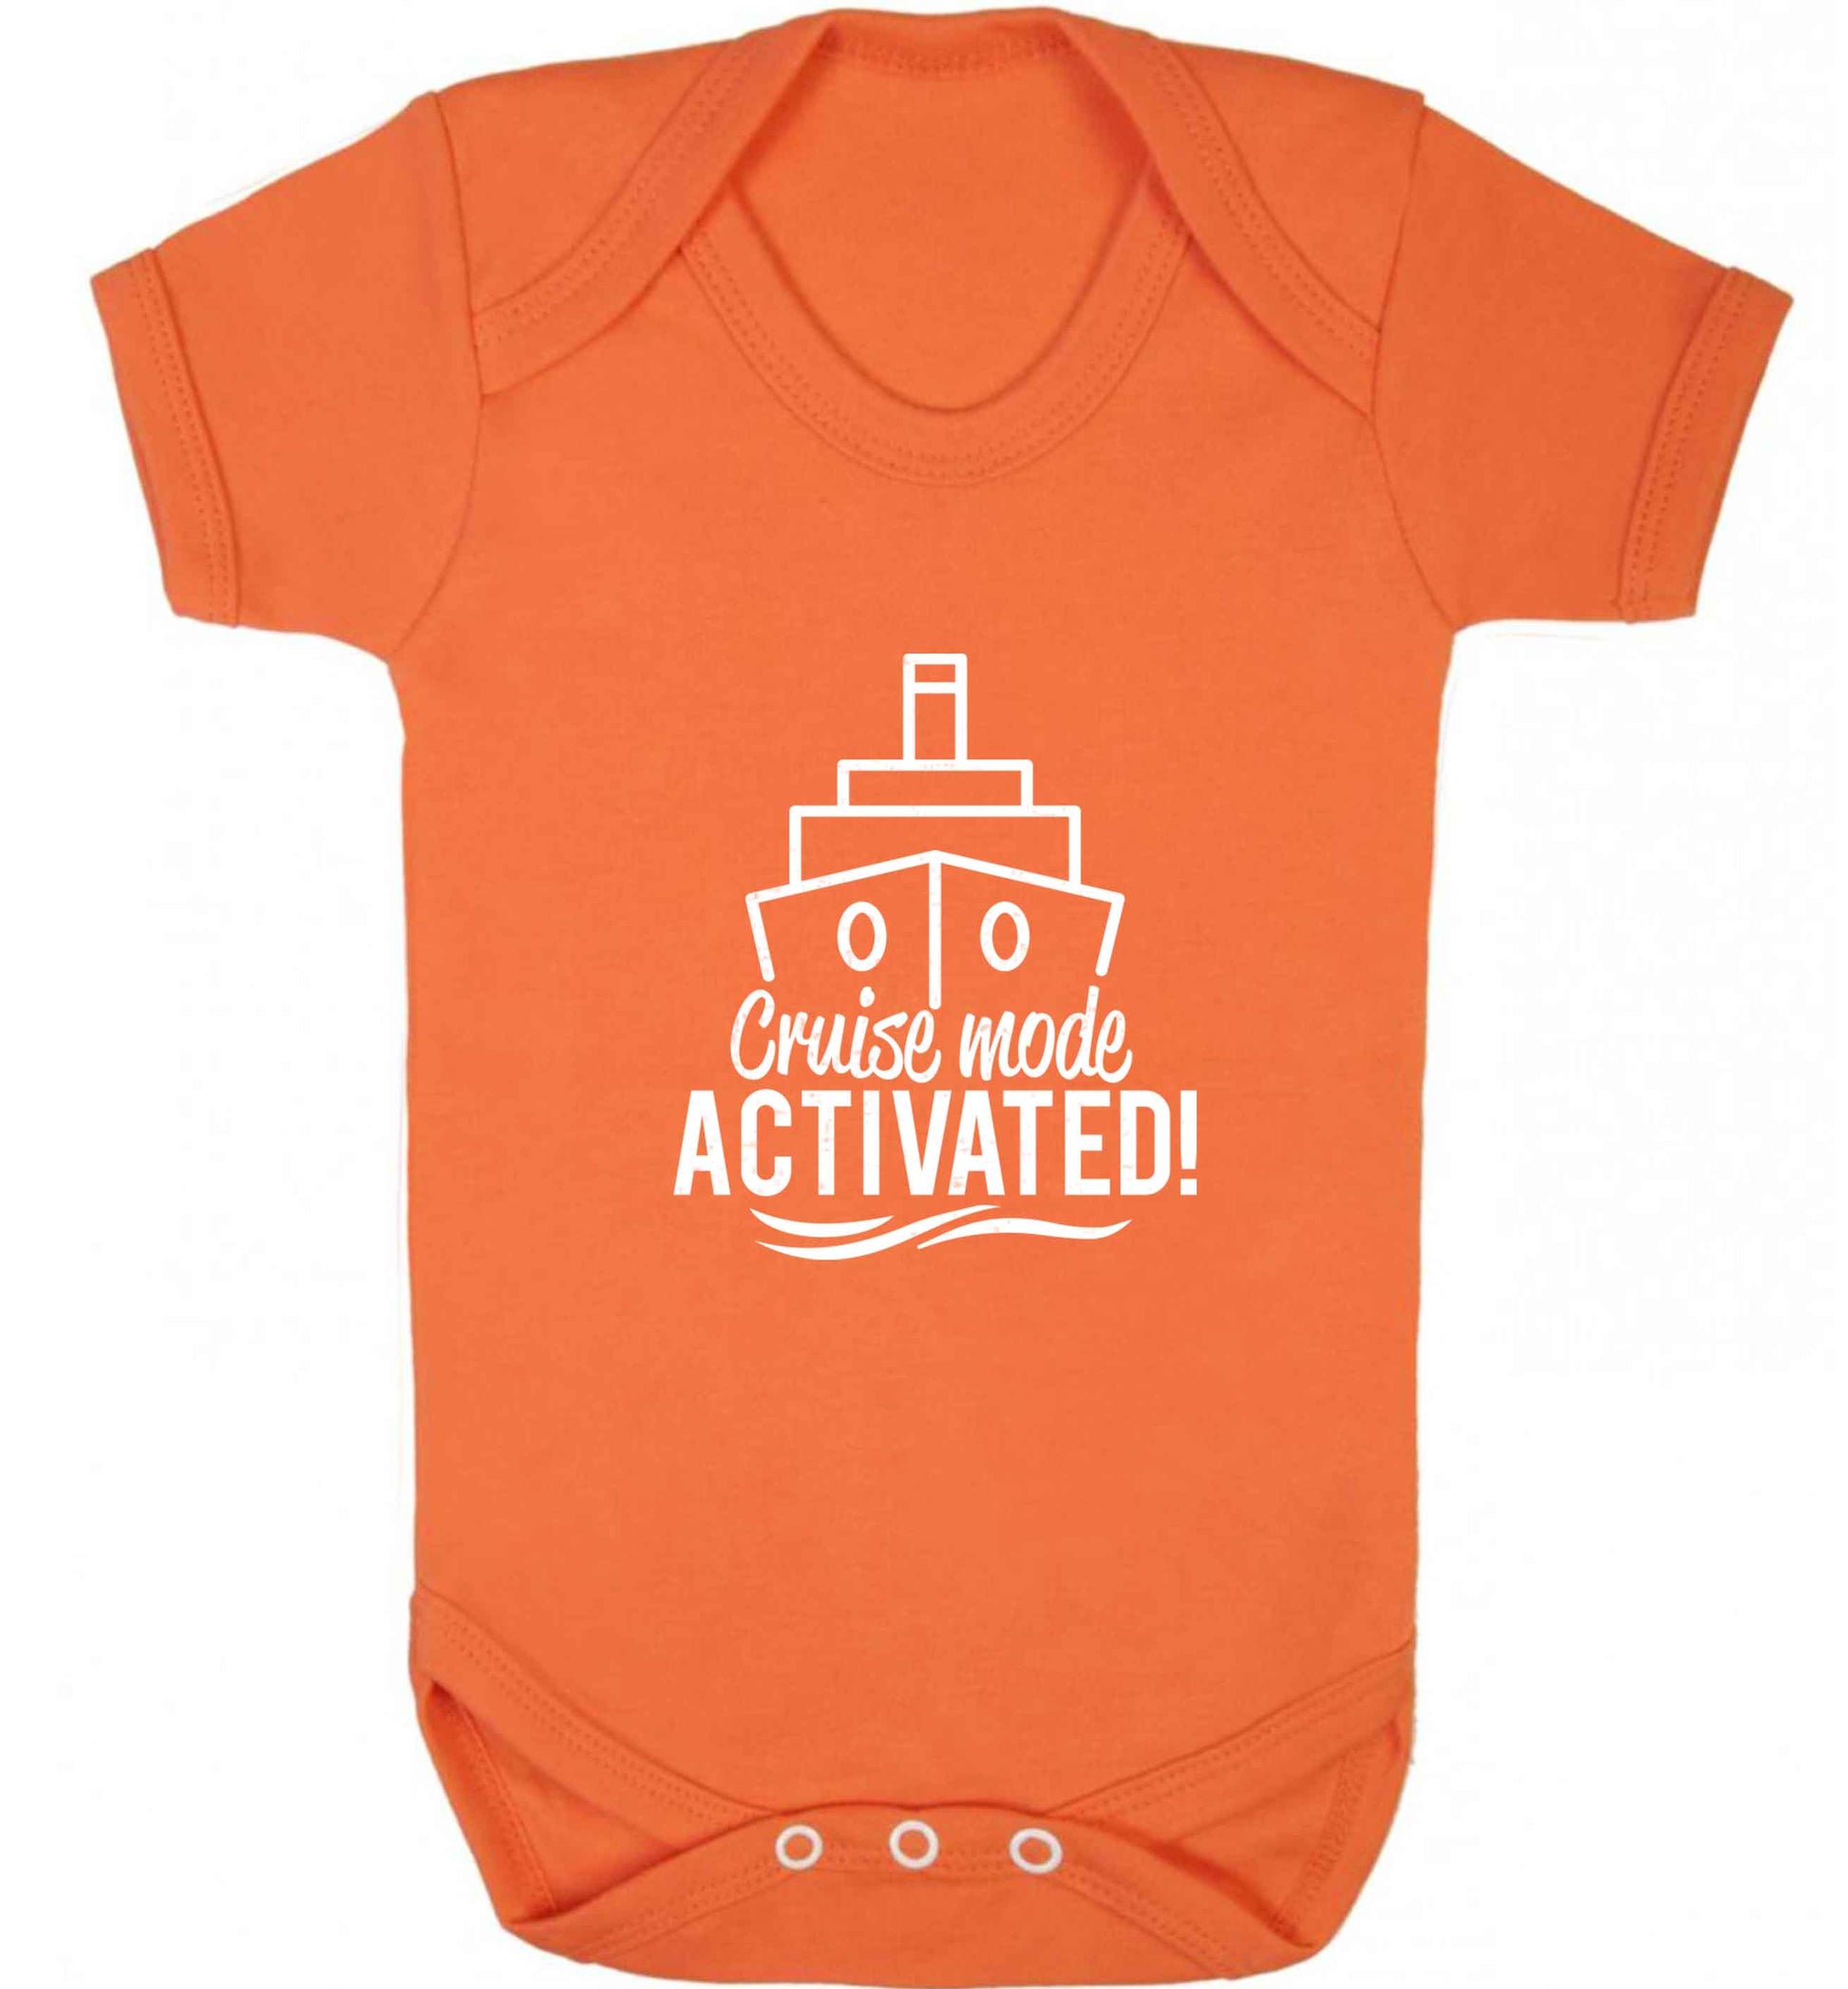 Cruise mode activated baby vest orange 18-24 months